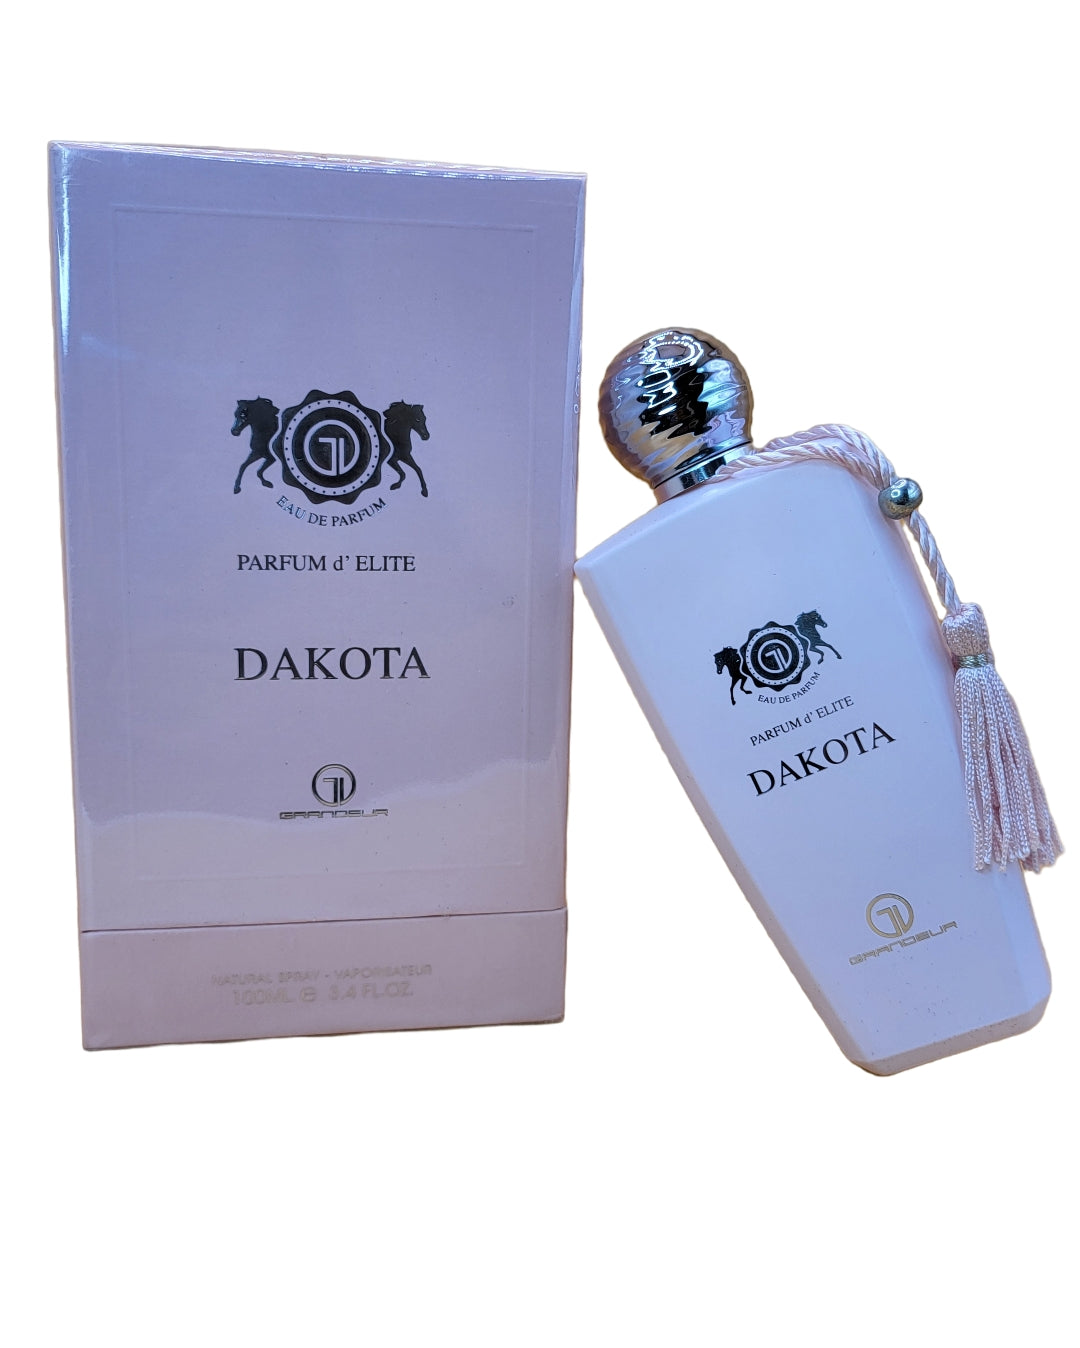 Dakota Eau De Parfum 3.4 oz - 100 ML: Grandeur's Timeless Fragrance for Women